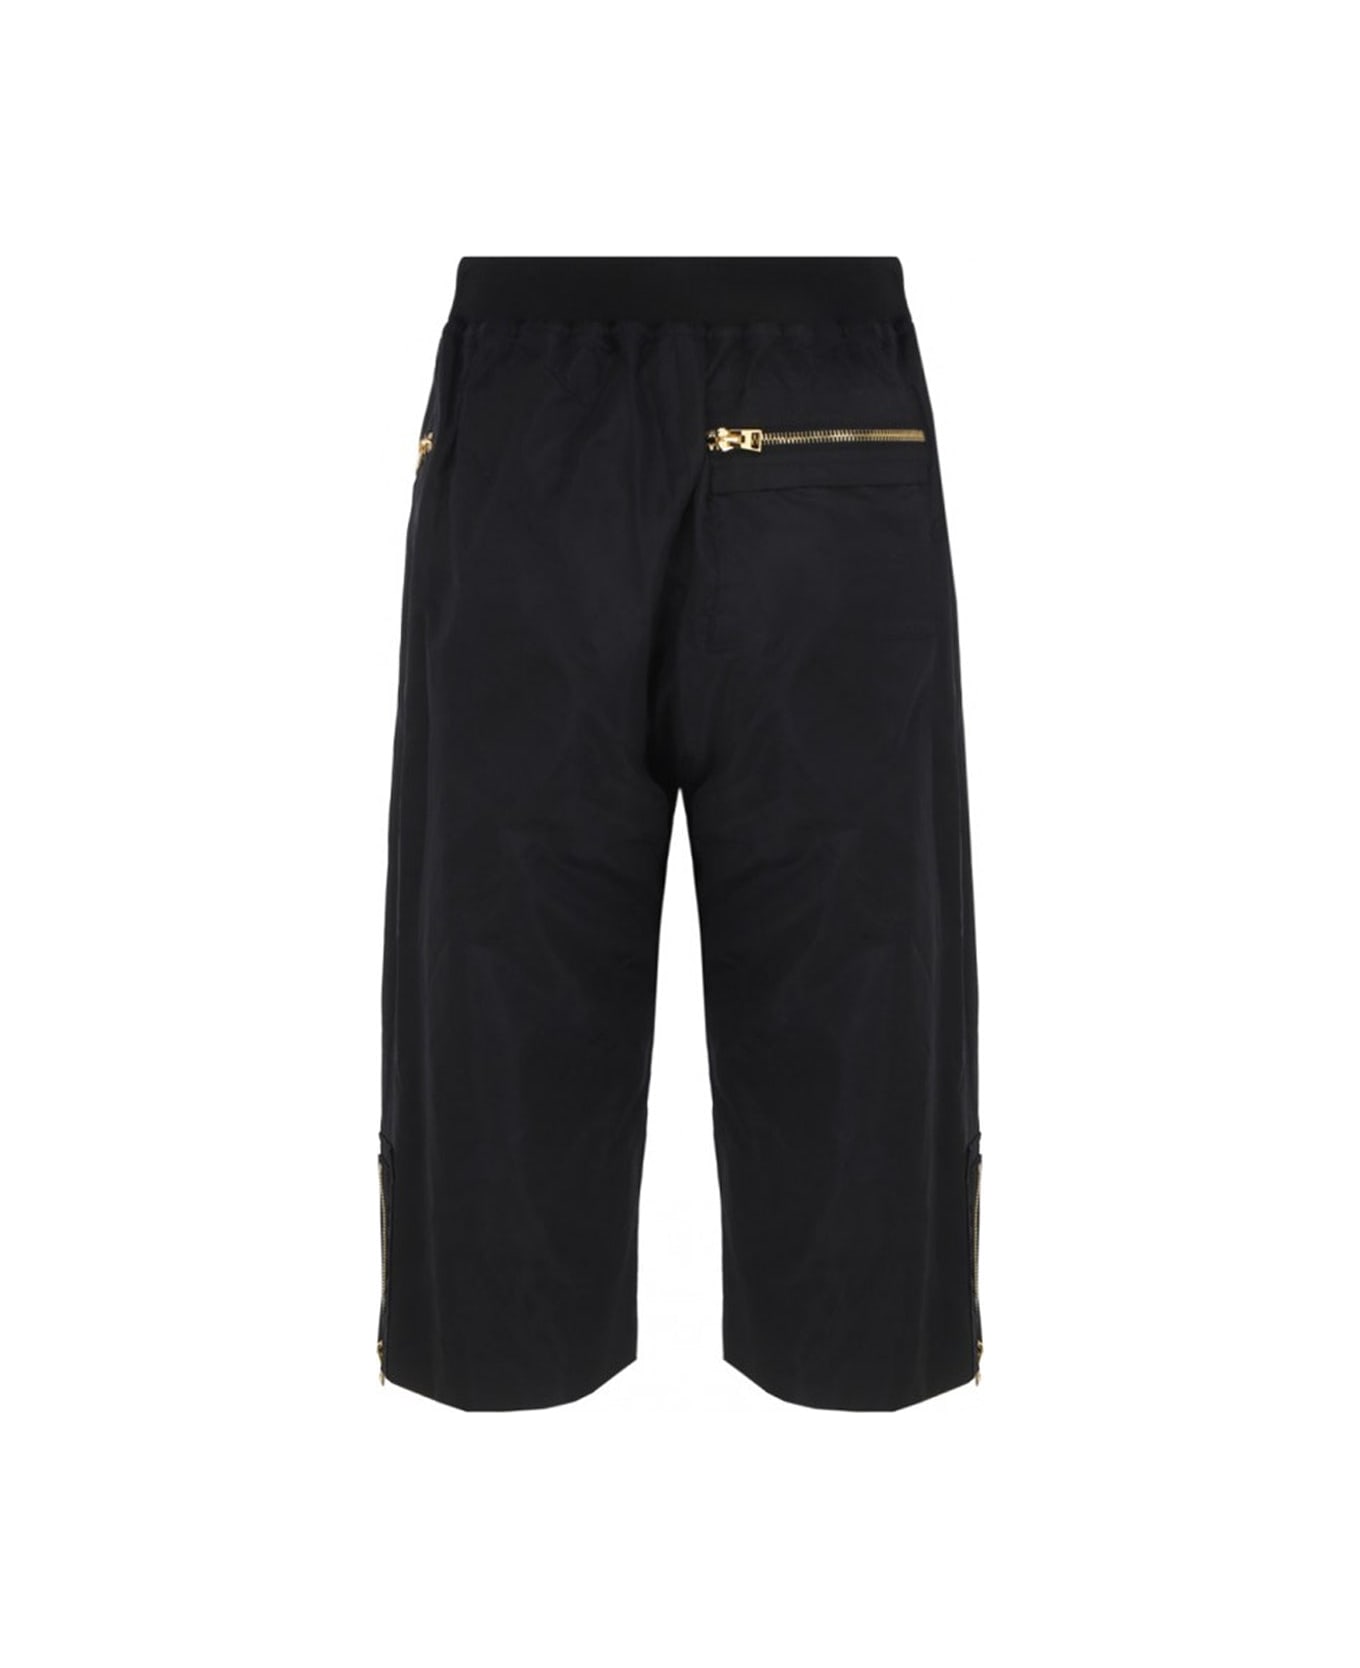 Tom Ford Woven Silk Shorts - Black